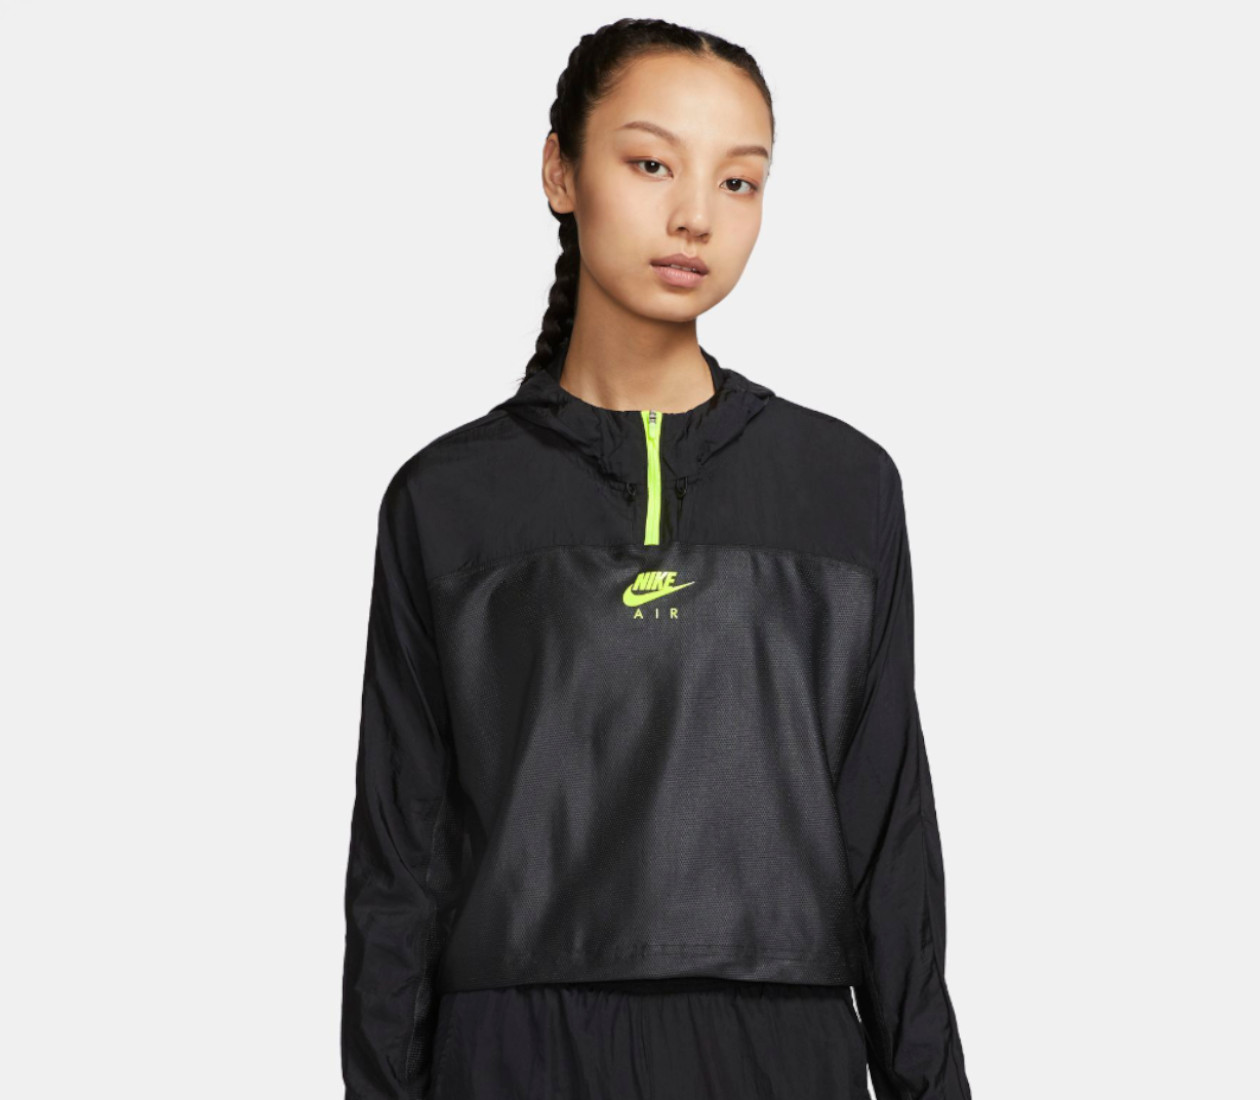 Nike Air (W) giacca running | LBM Sport